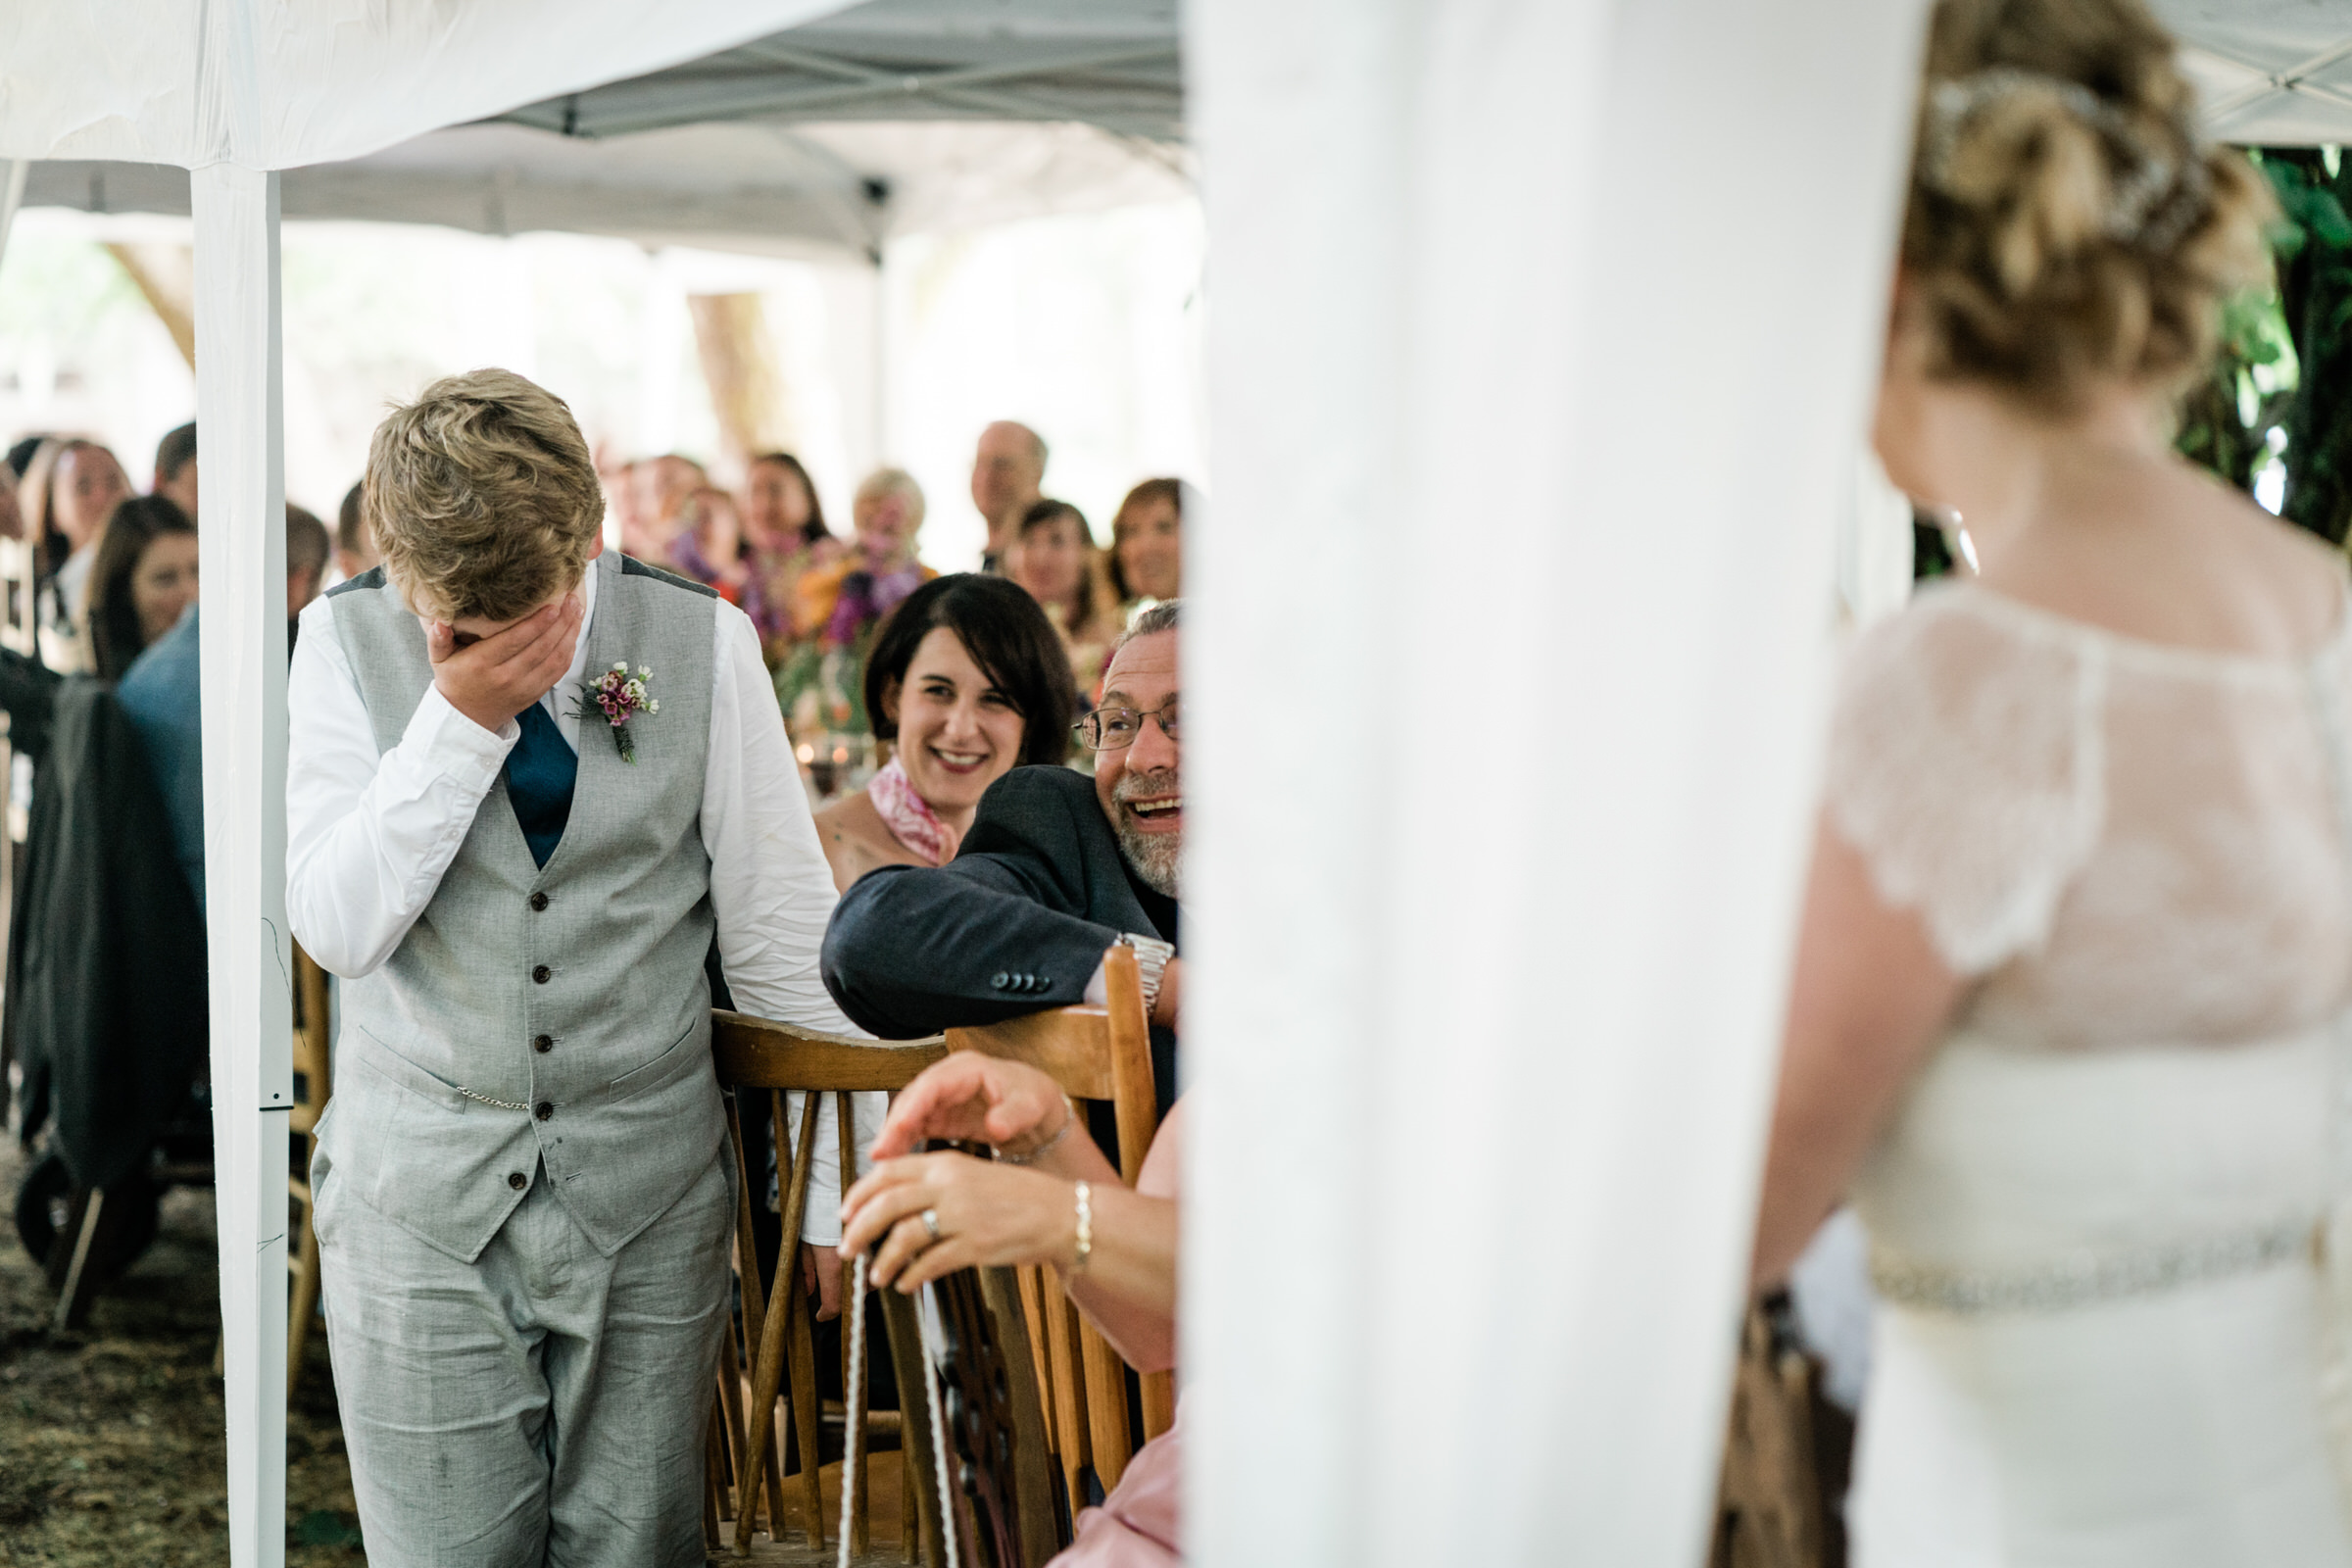 Wayfarer Whidbey Island Wedding: Joe's son is overcome with emotion before his toast